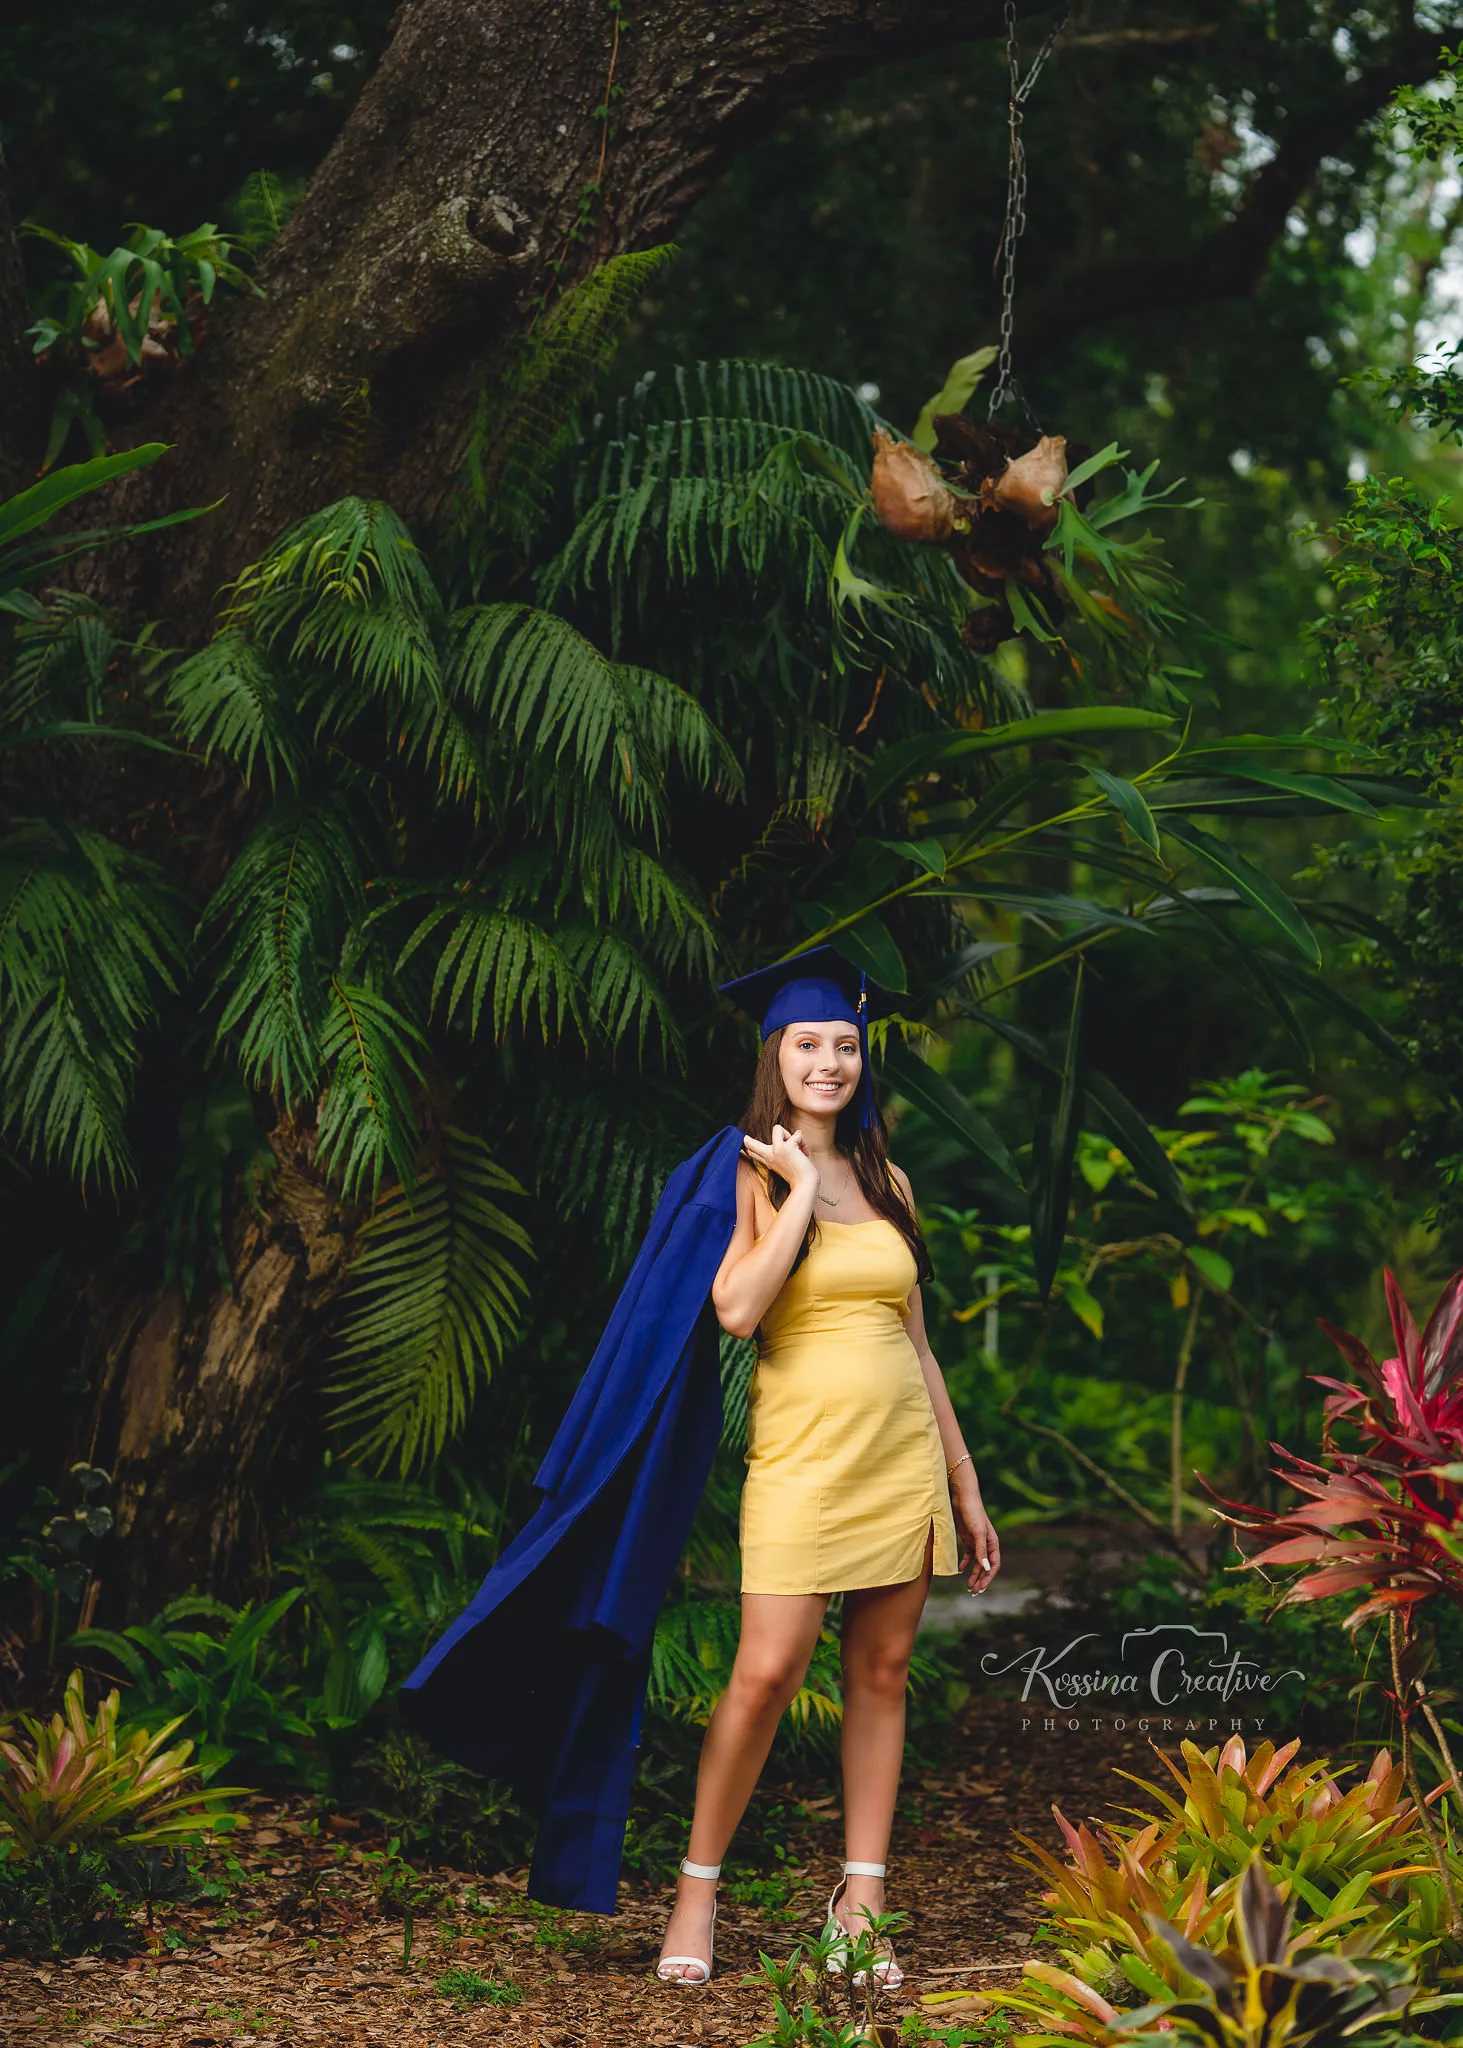 Orlando Outdoor Senior portrait photographer graduation photos cap and gown